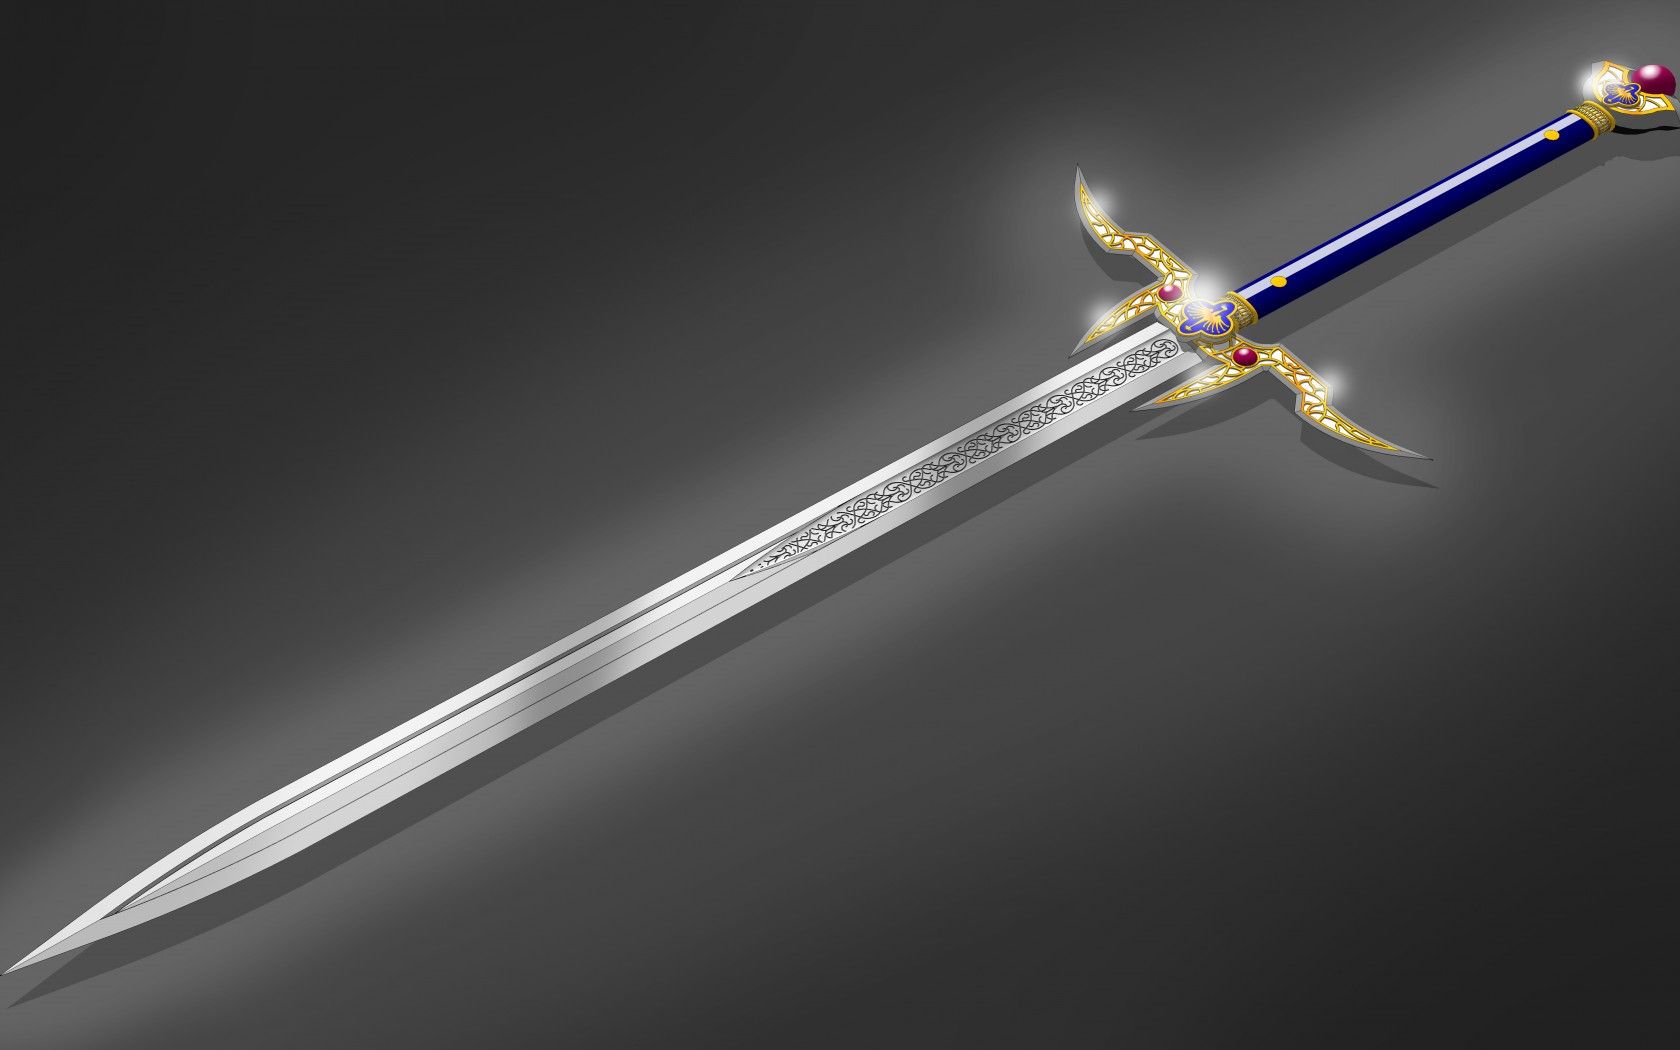 sword images free download